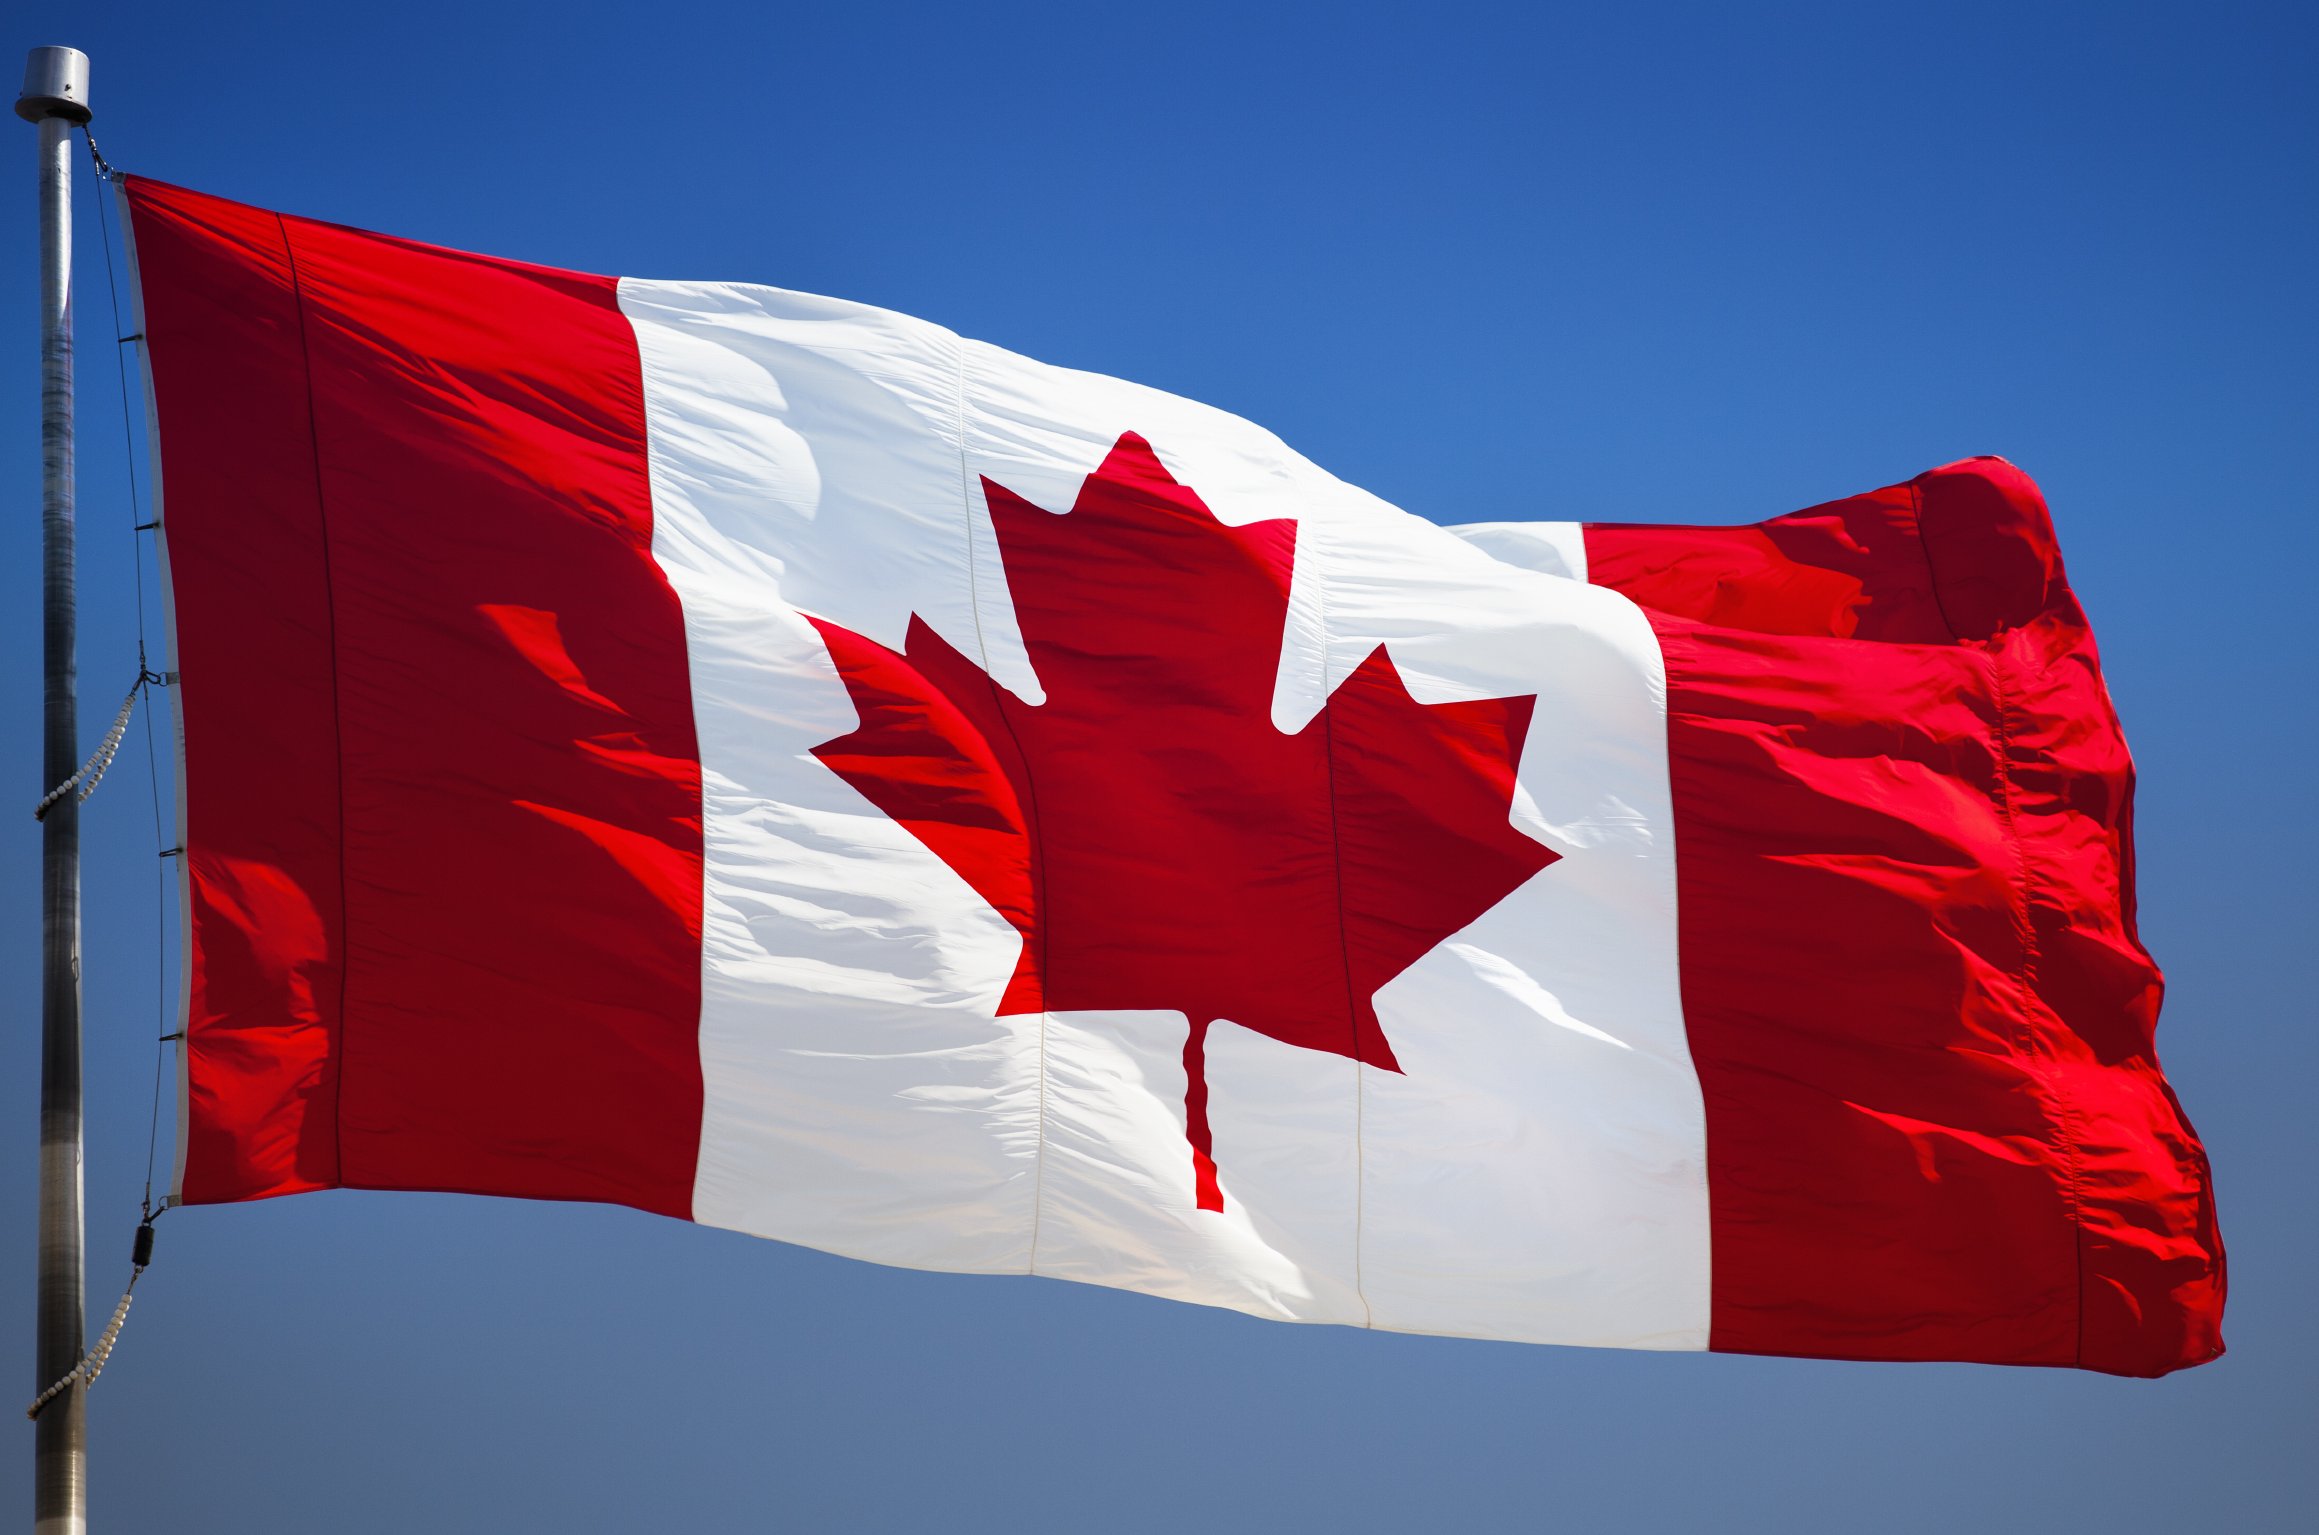 Canadian Flag Waving Google image from https://www.thelitigator.ca/litigator/wp-content/uploads/Canadian-flag-iStock_000017715869.jpg